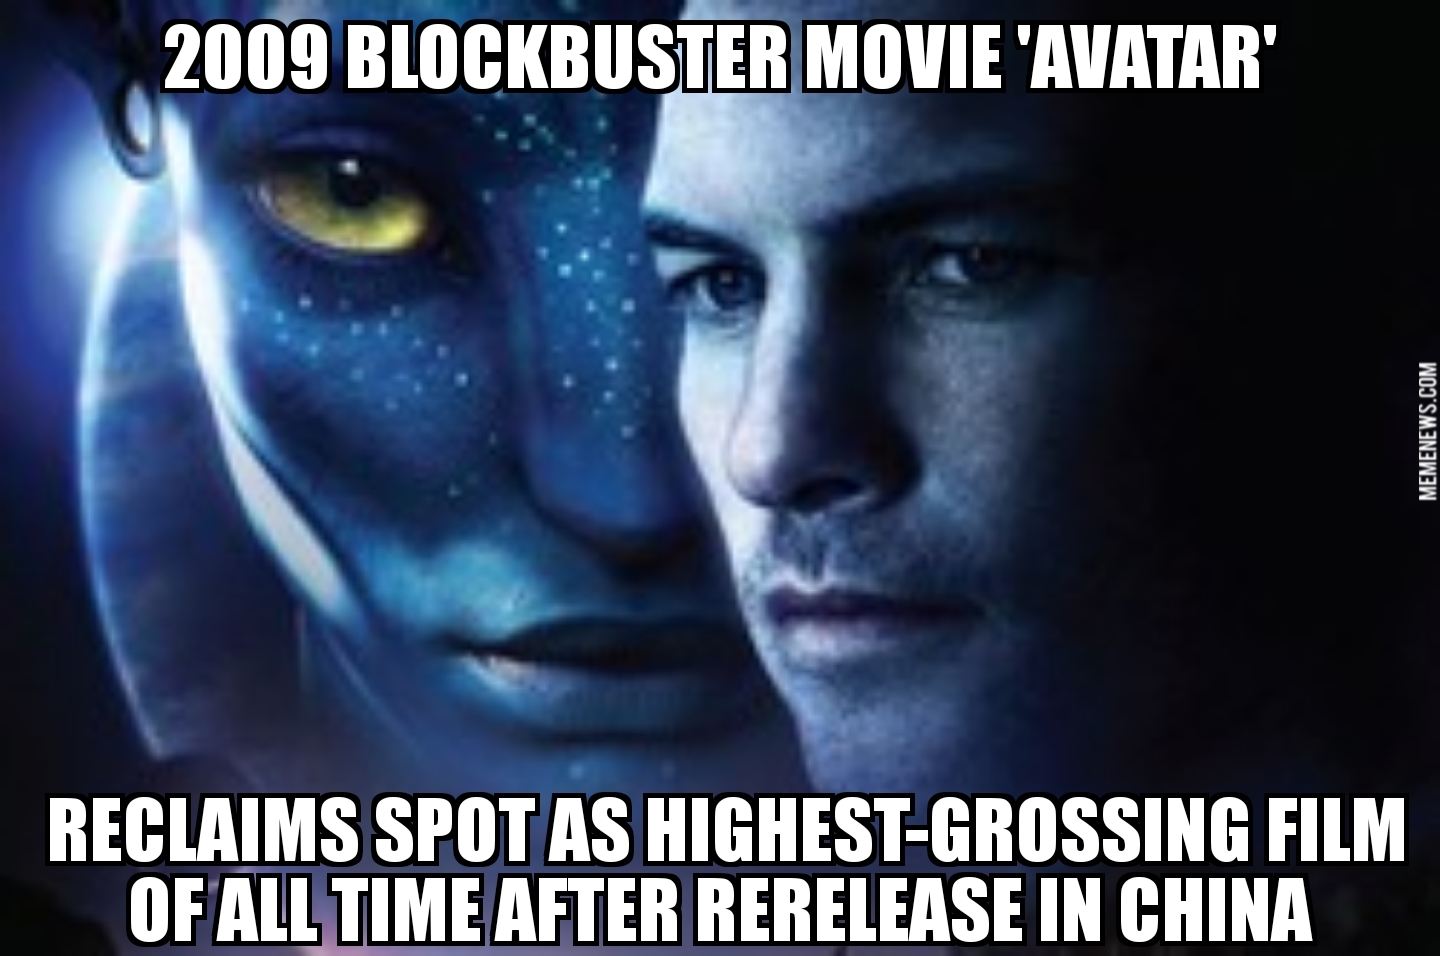 ‘Avatar’ retakes top-grossing spot